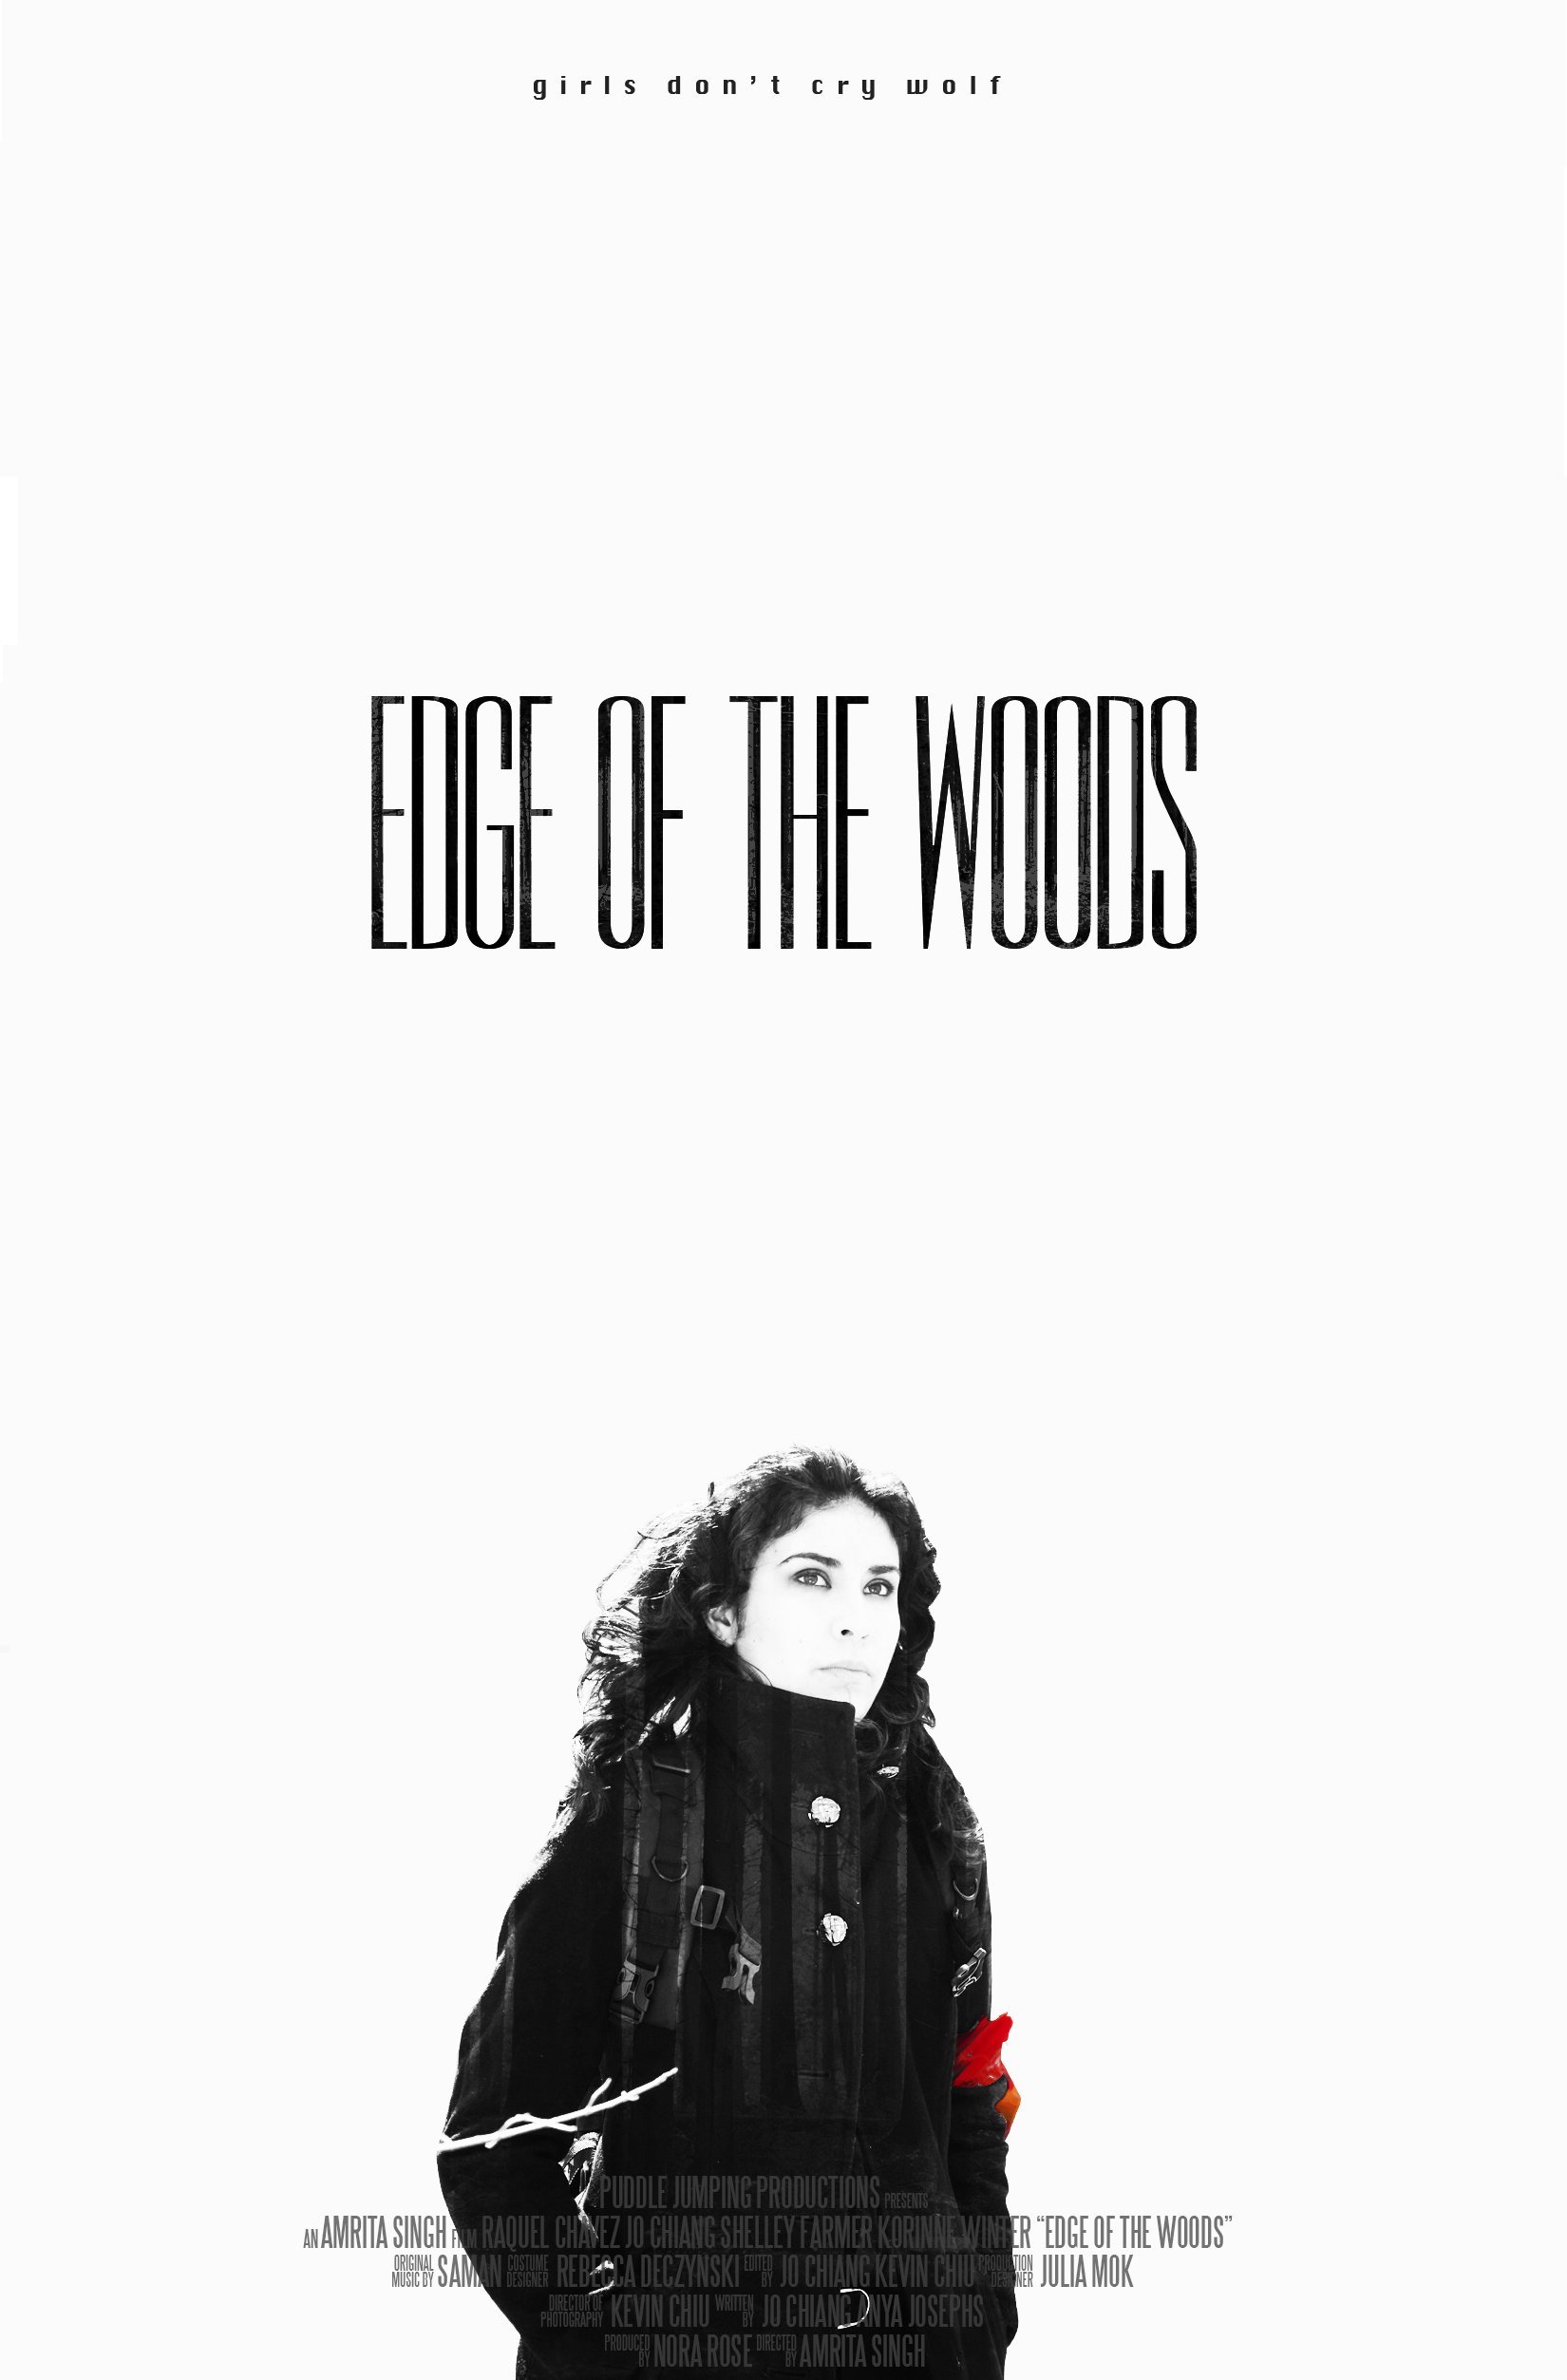 Edge of the Woods